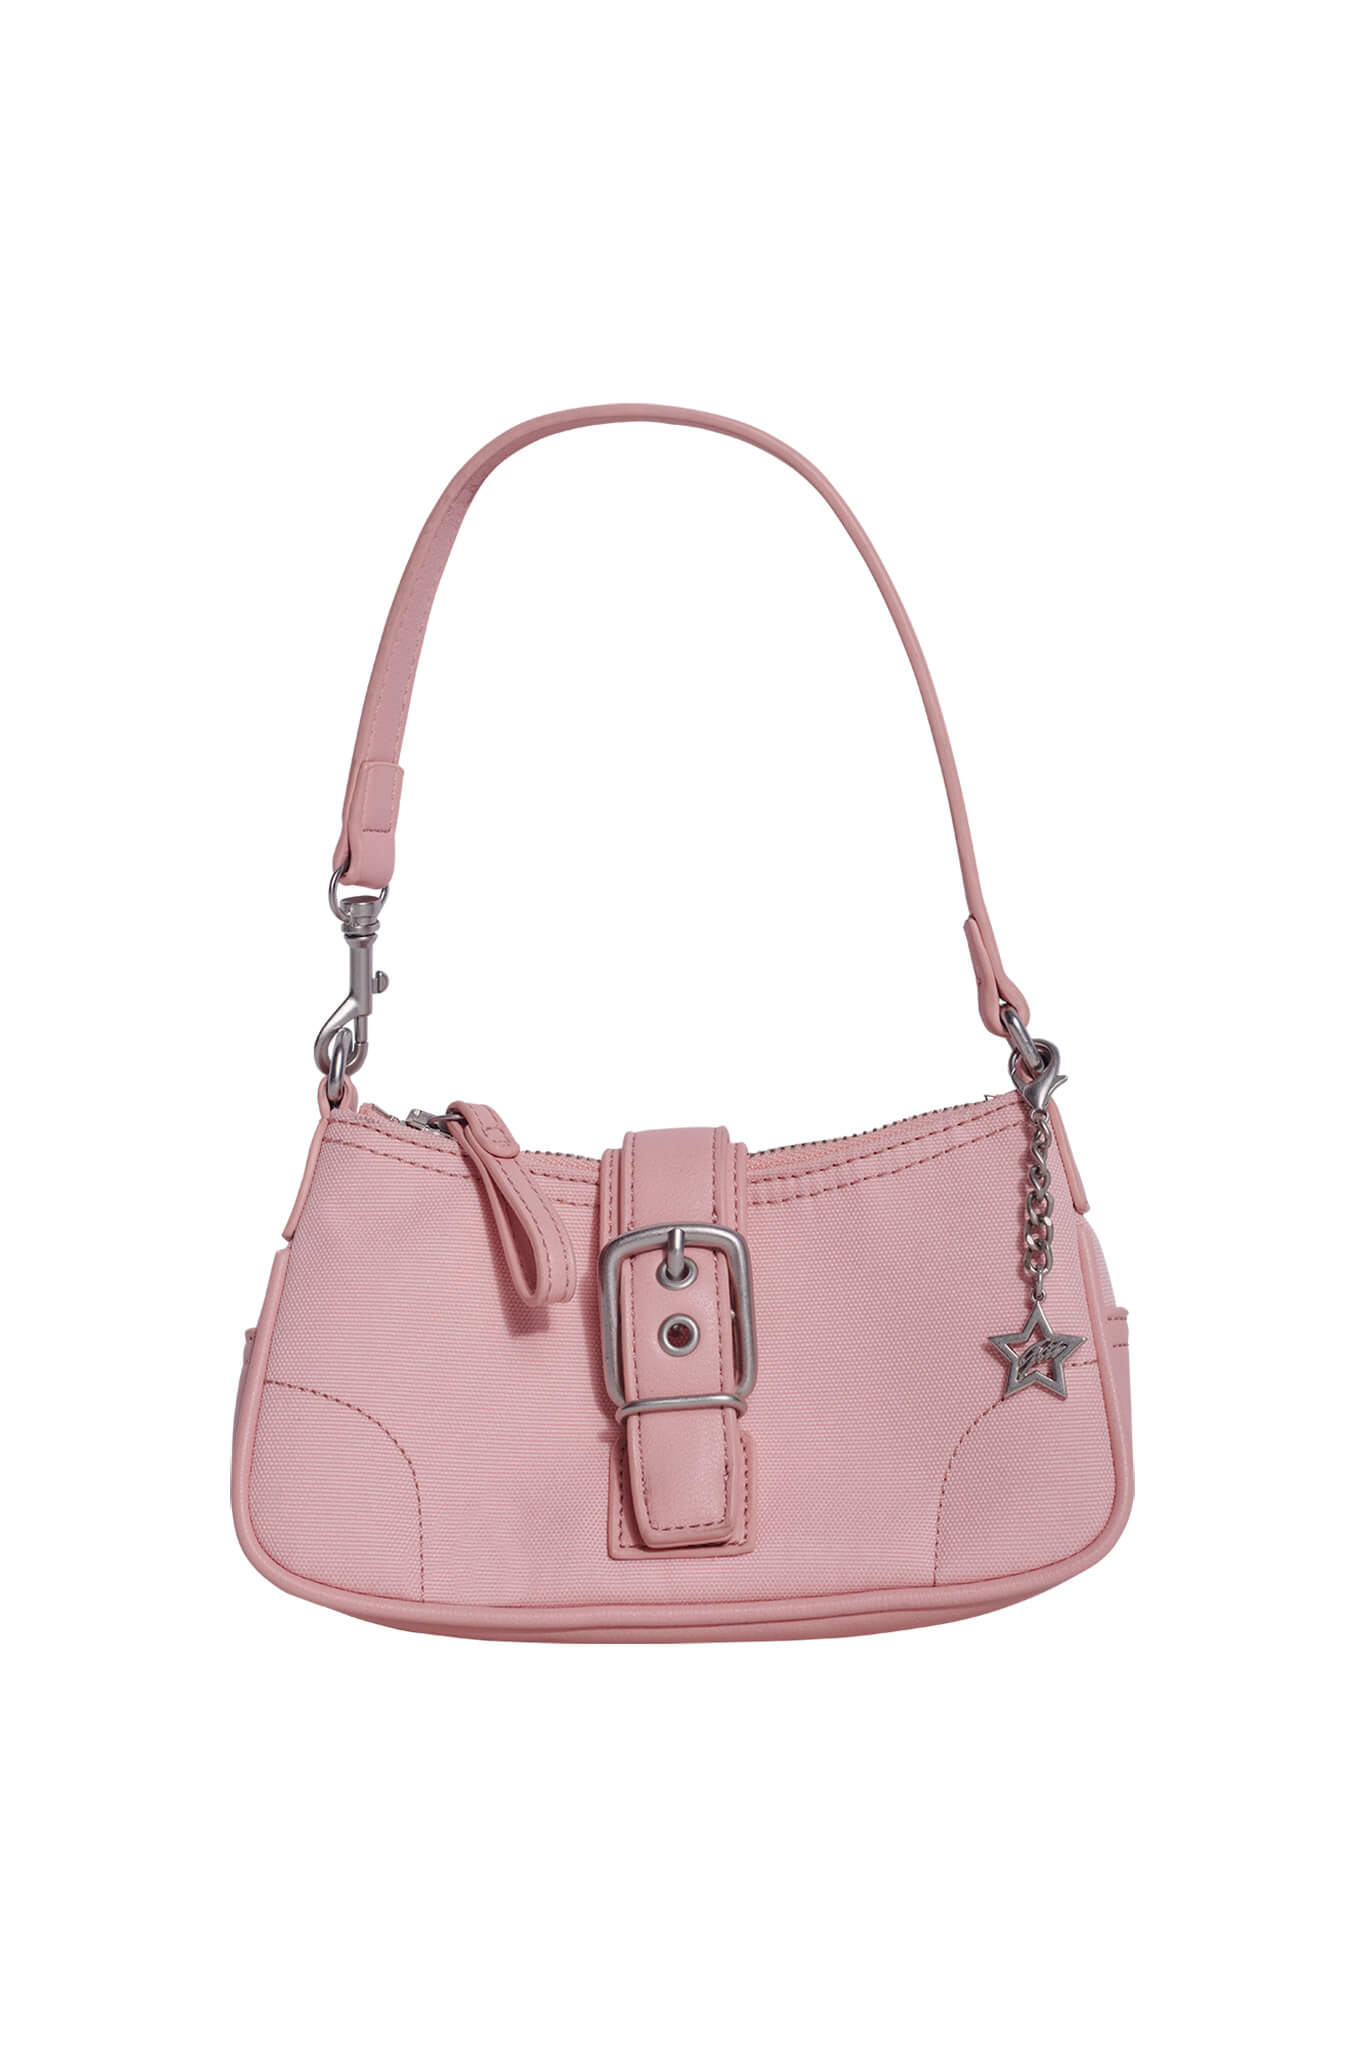 Pin by Pinner on ~ Lily ~  Bags, Fashion handbags, Fashion bags